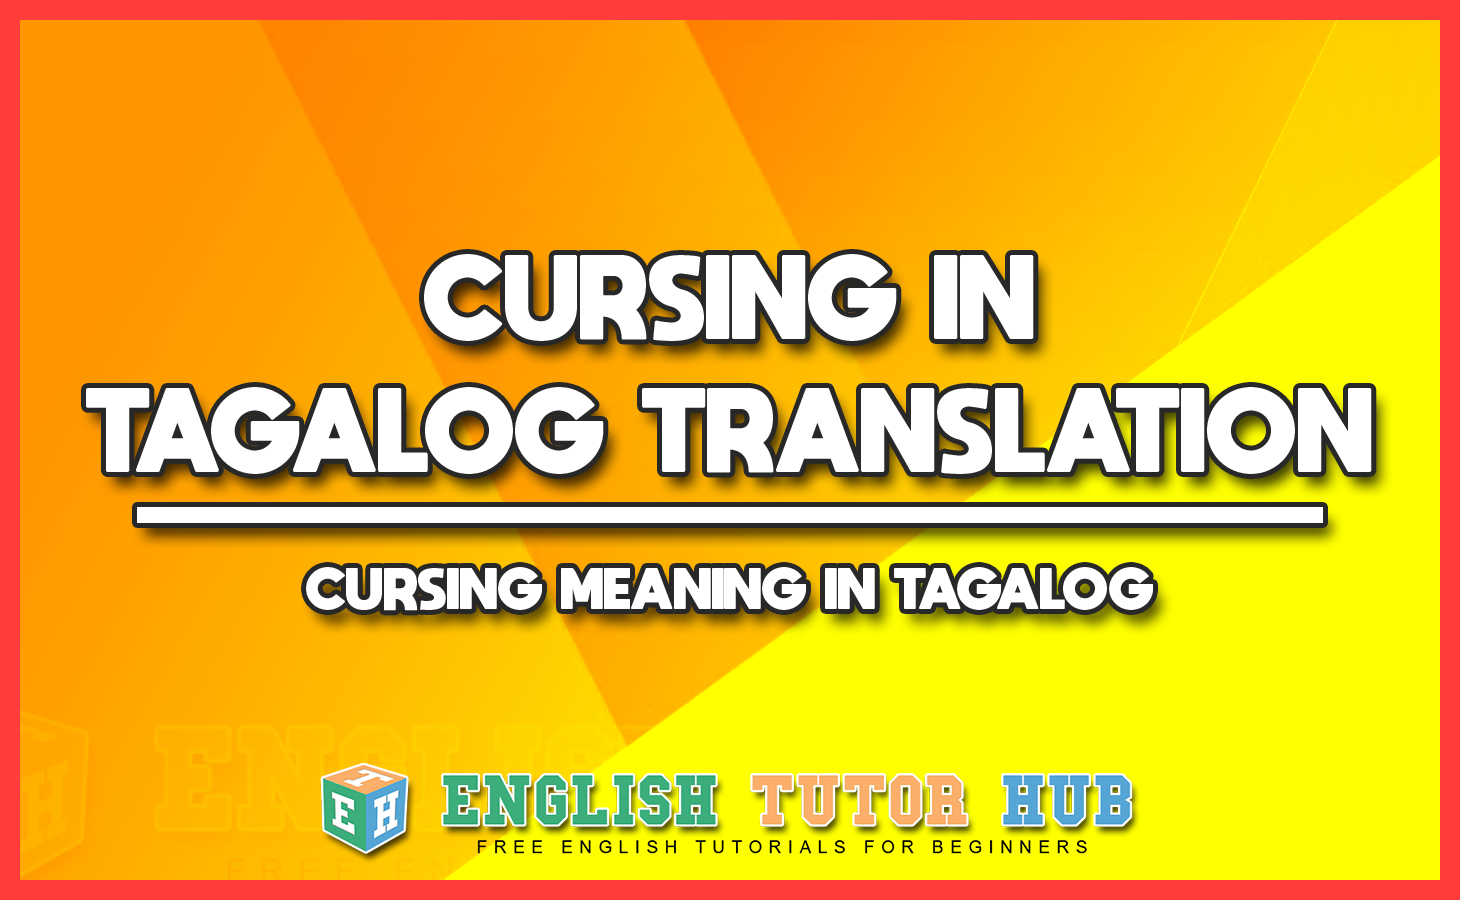 CURSING IN TAGALOG TRANSLATION - CURSING MEANING IN TAGALOG